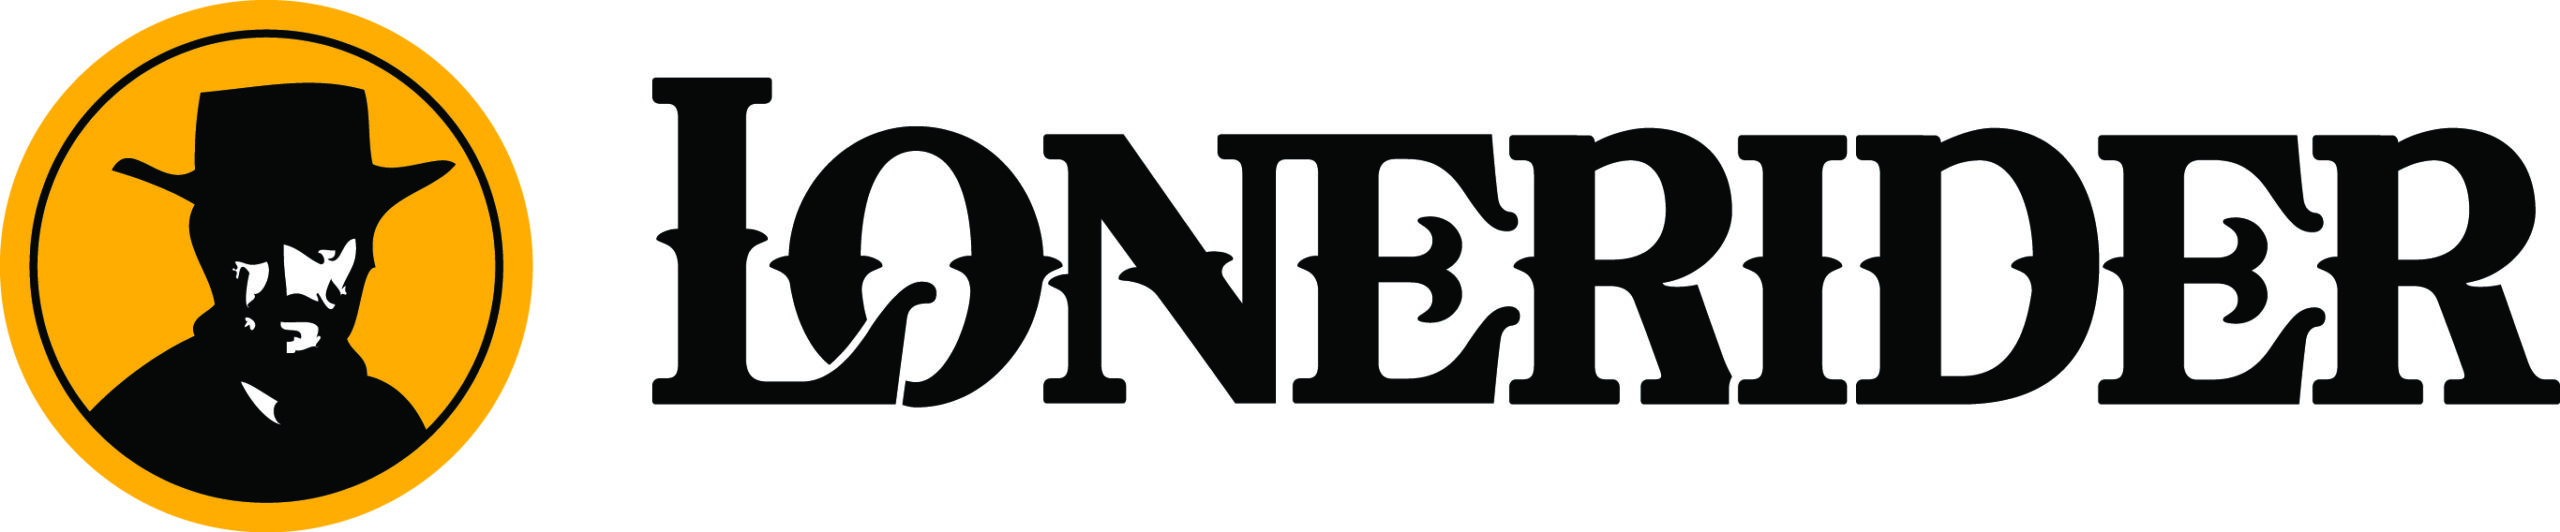 LoneRider Brewery Logo